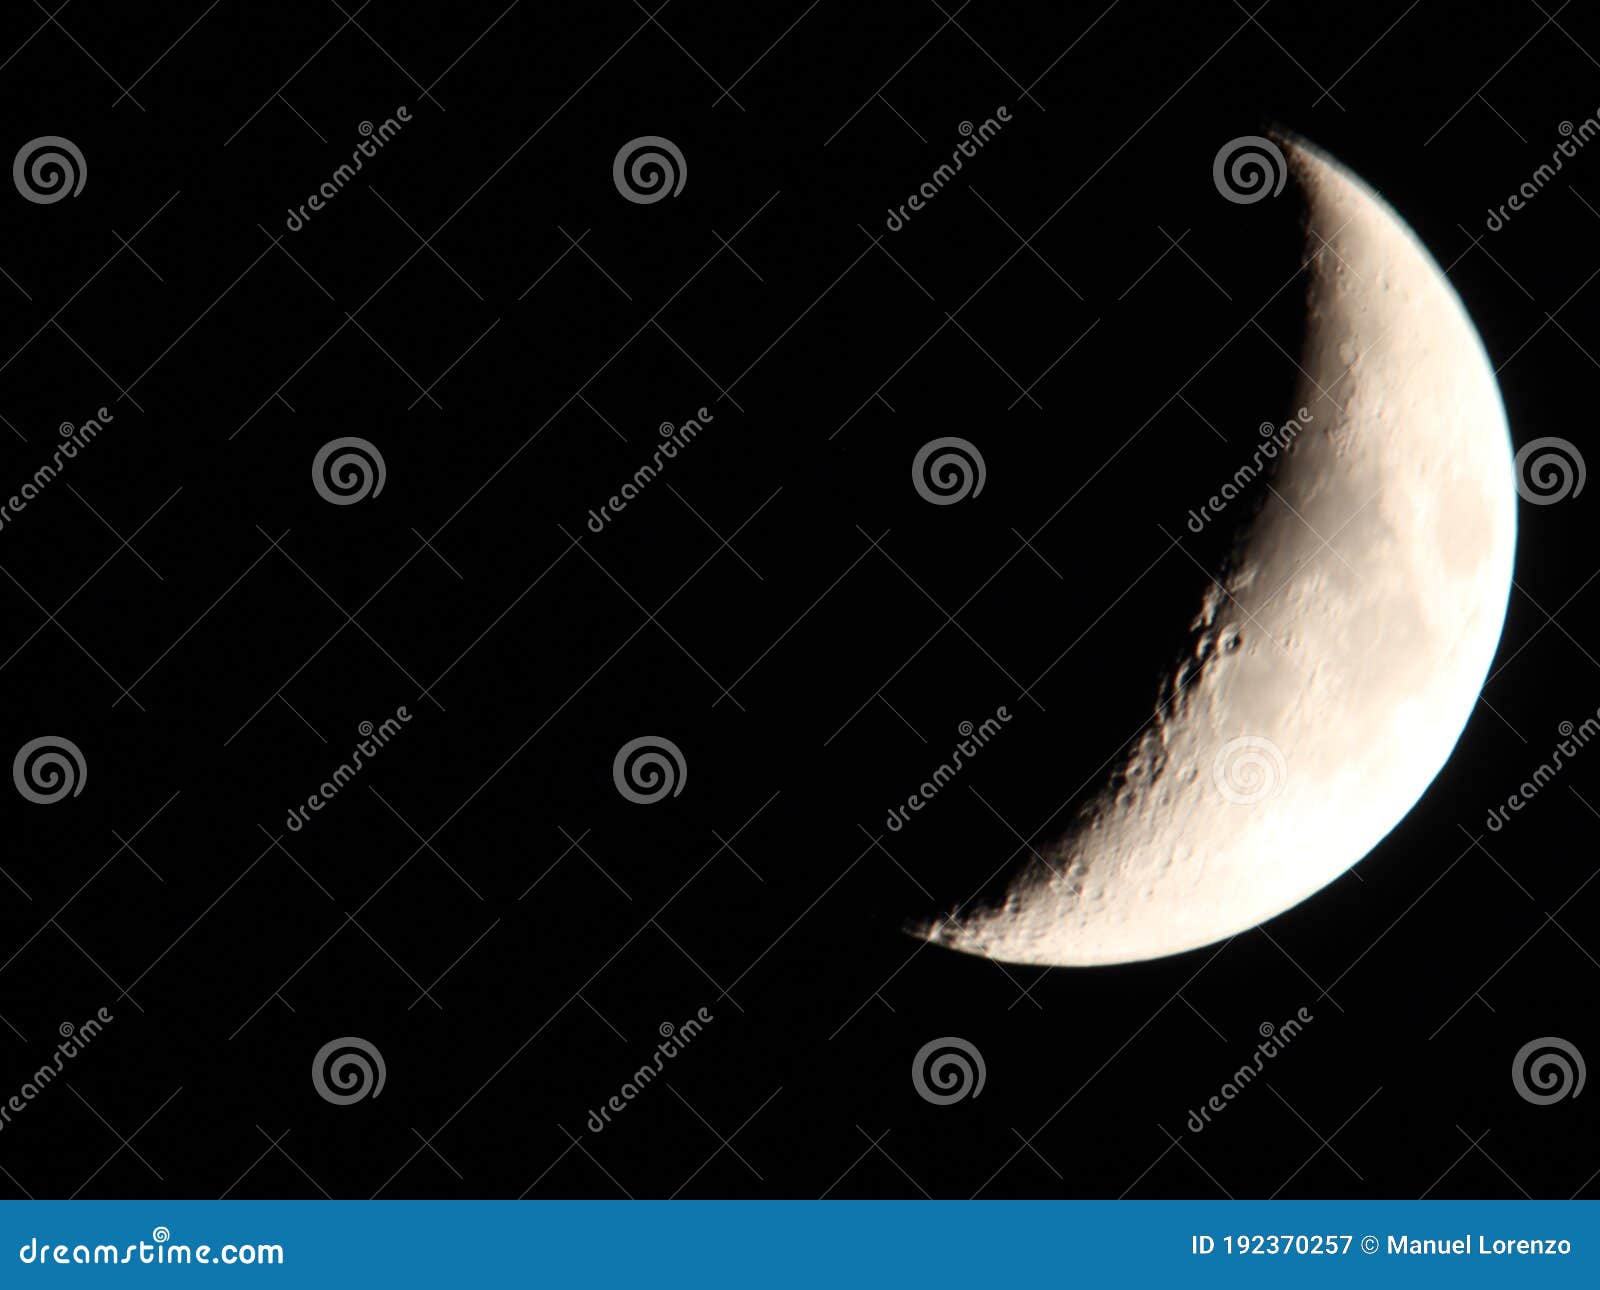 moon in growing room with satellite craters night sleep